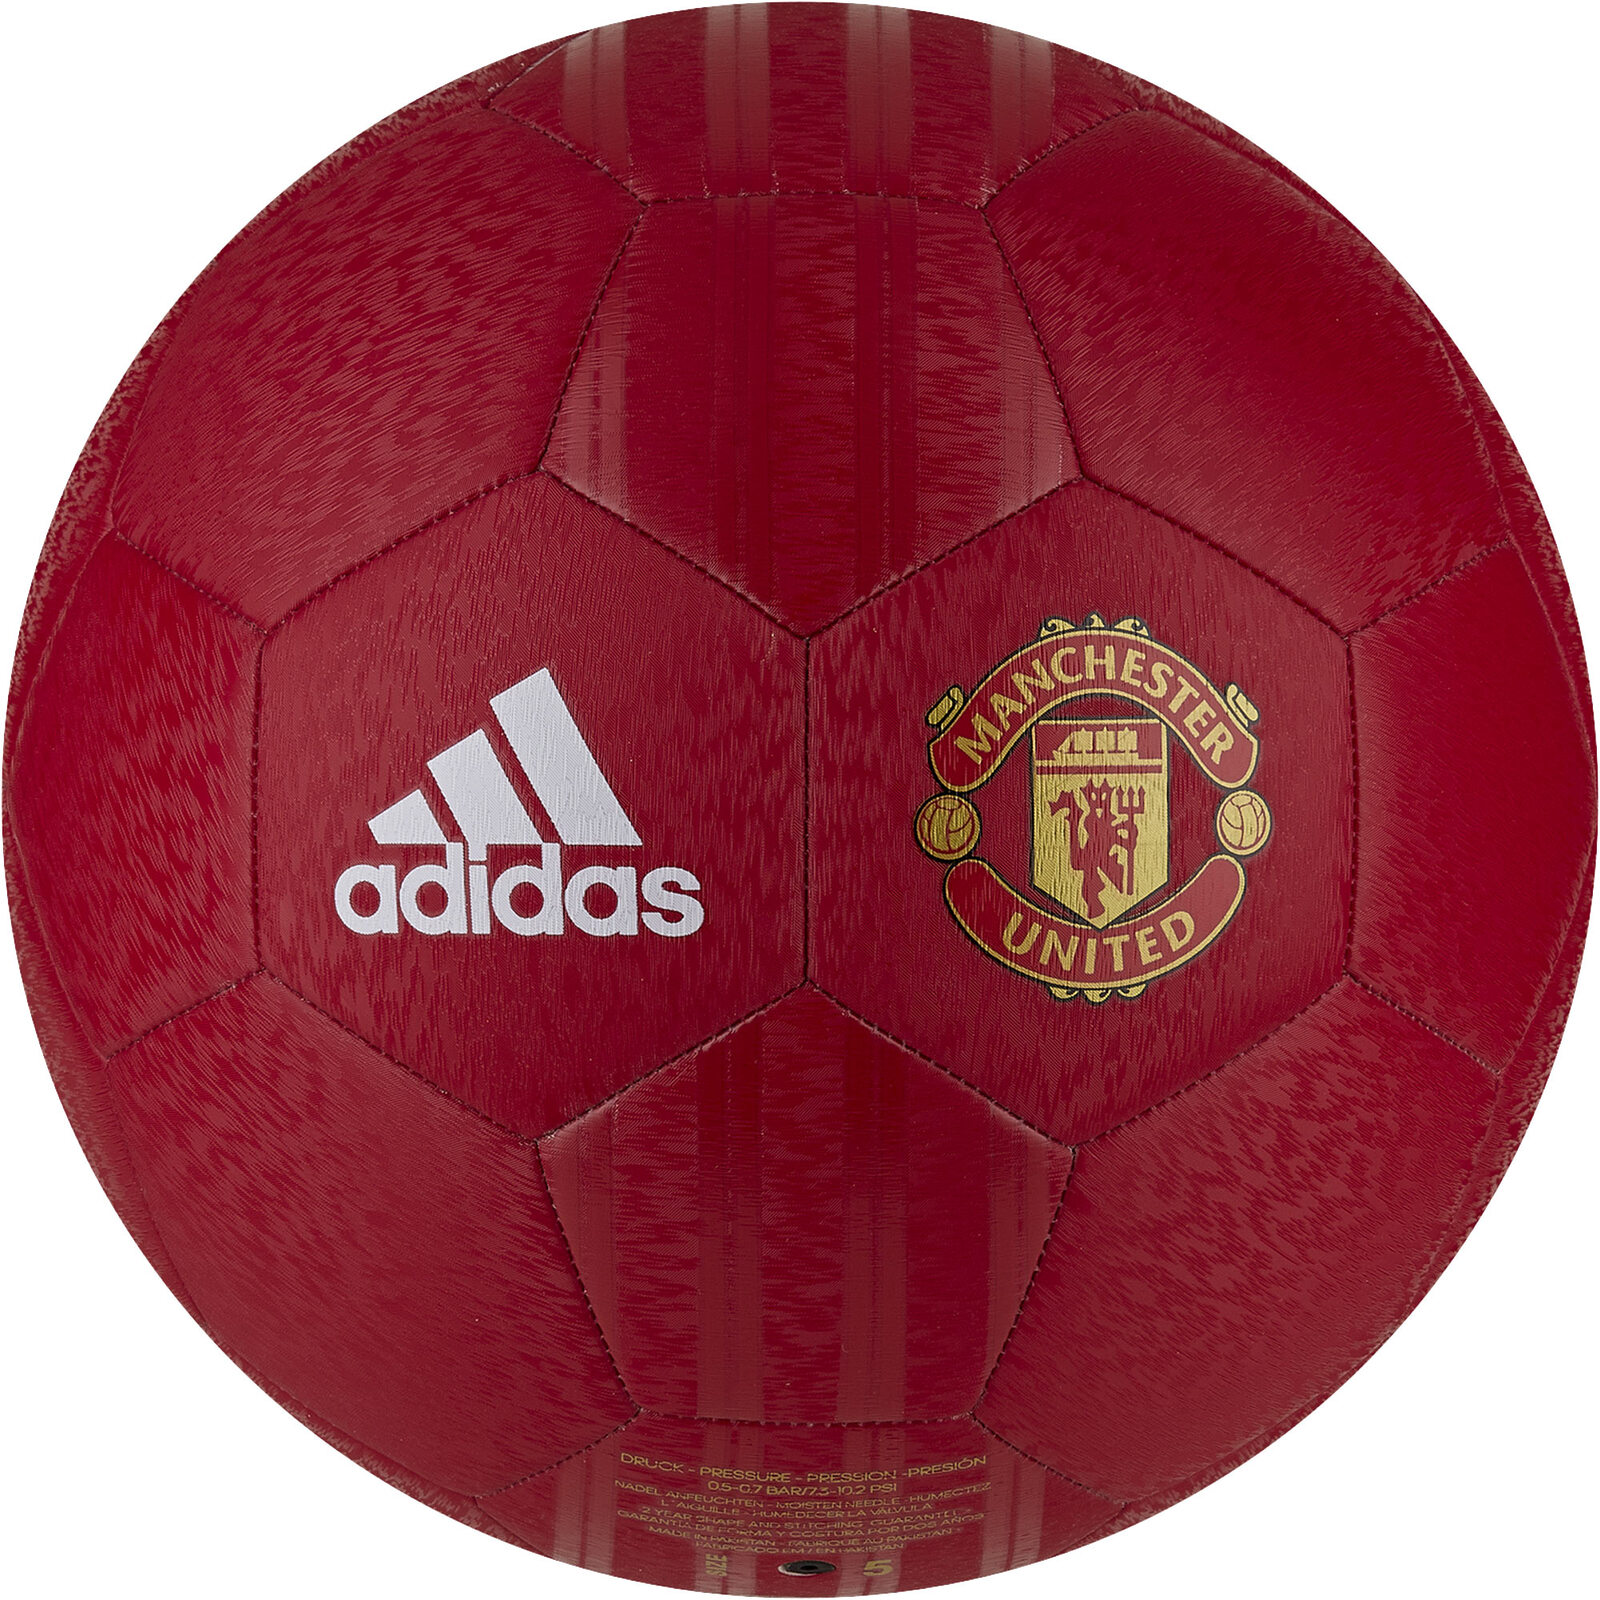 Adidas Manchester United Soccer Ball For Sale - BallSports Australia